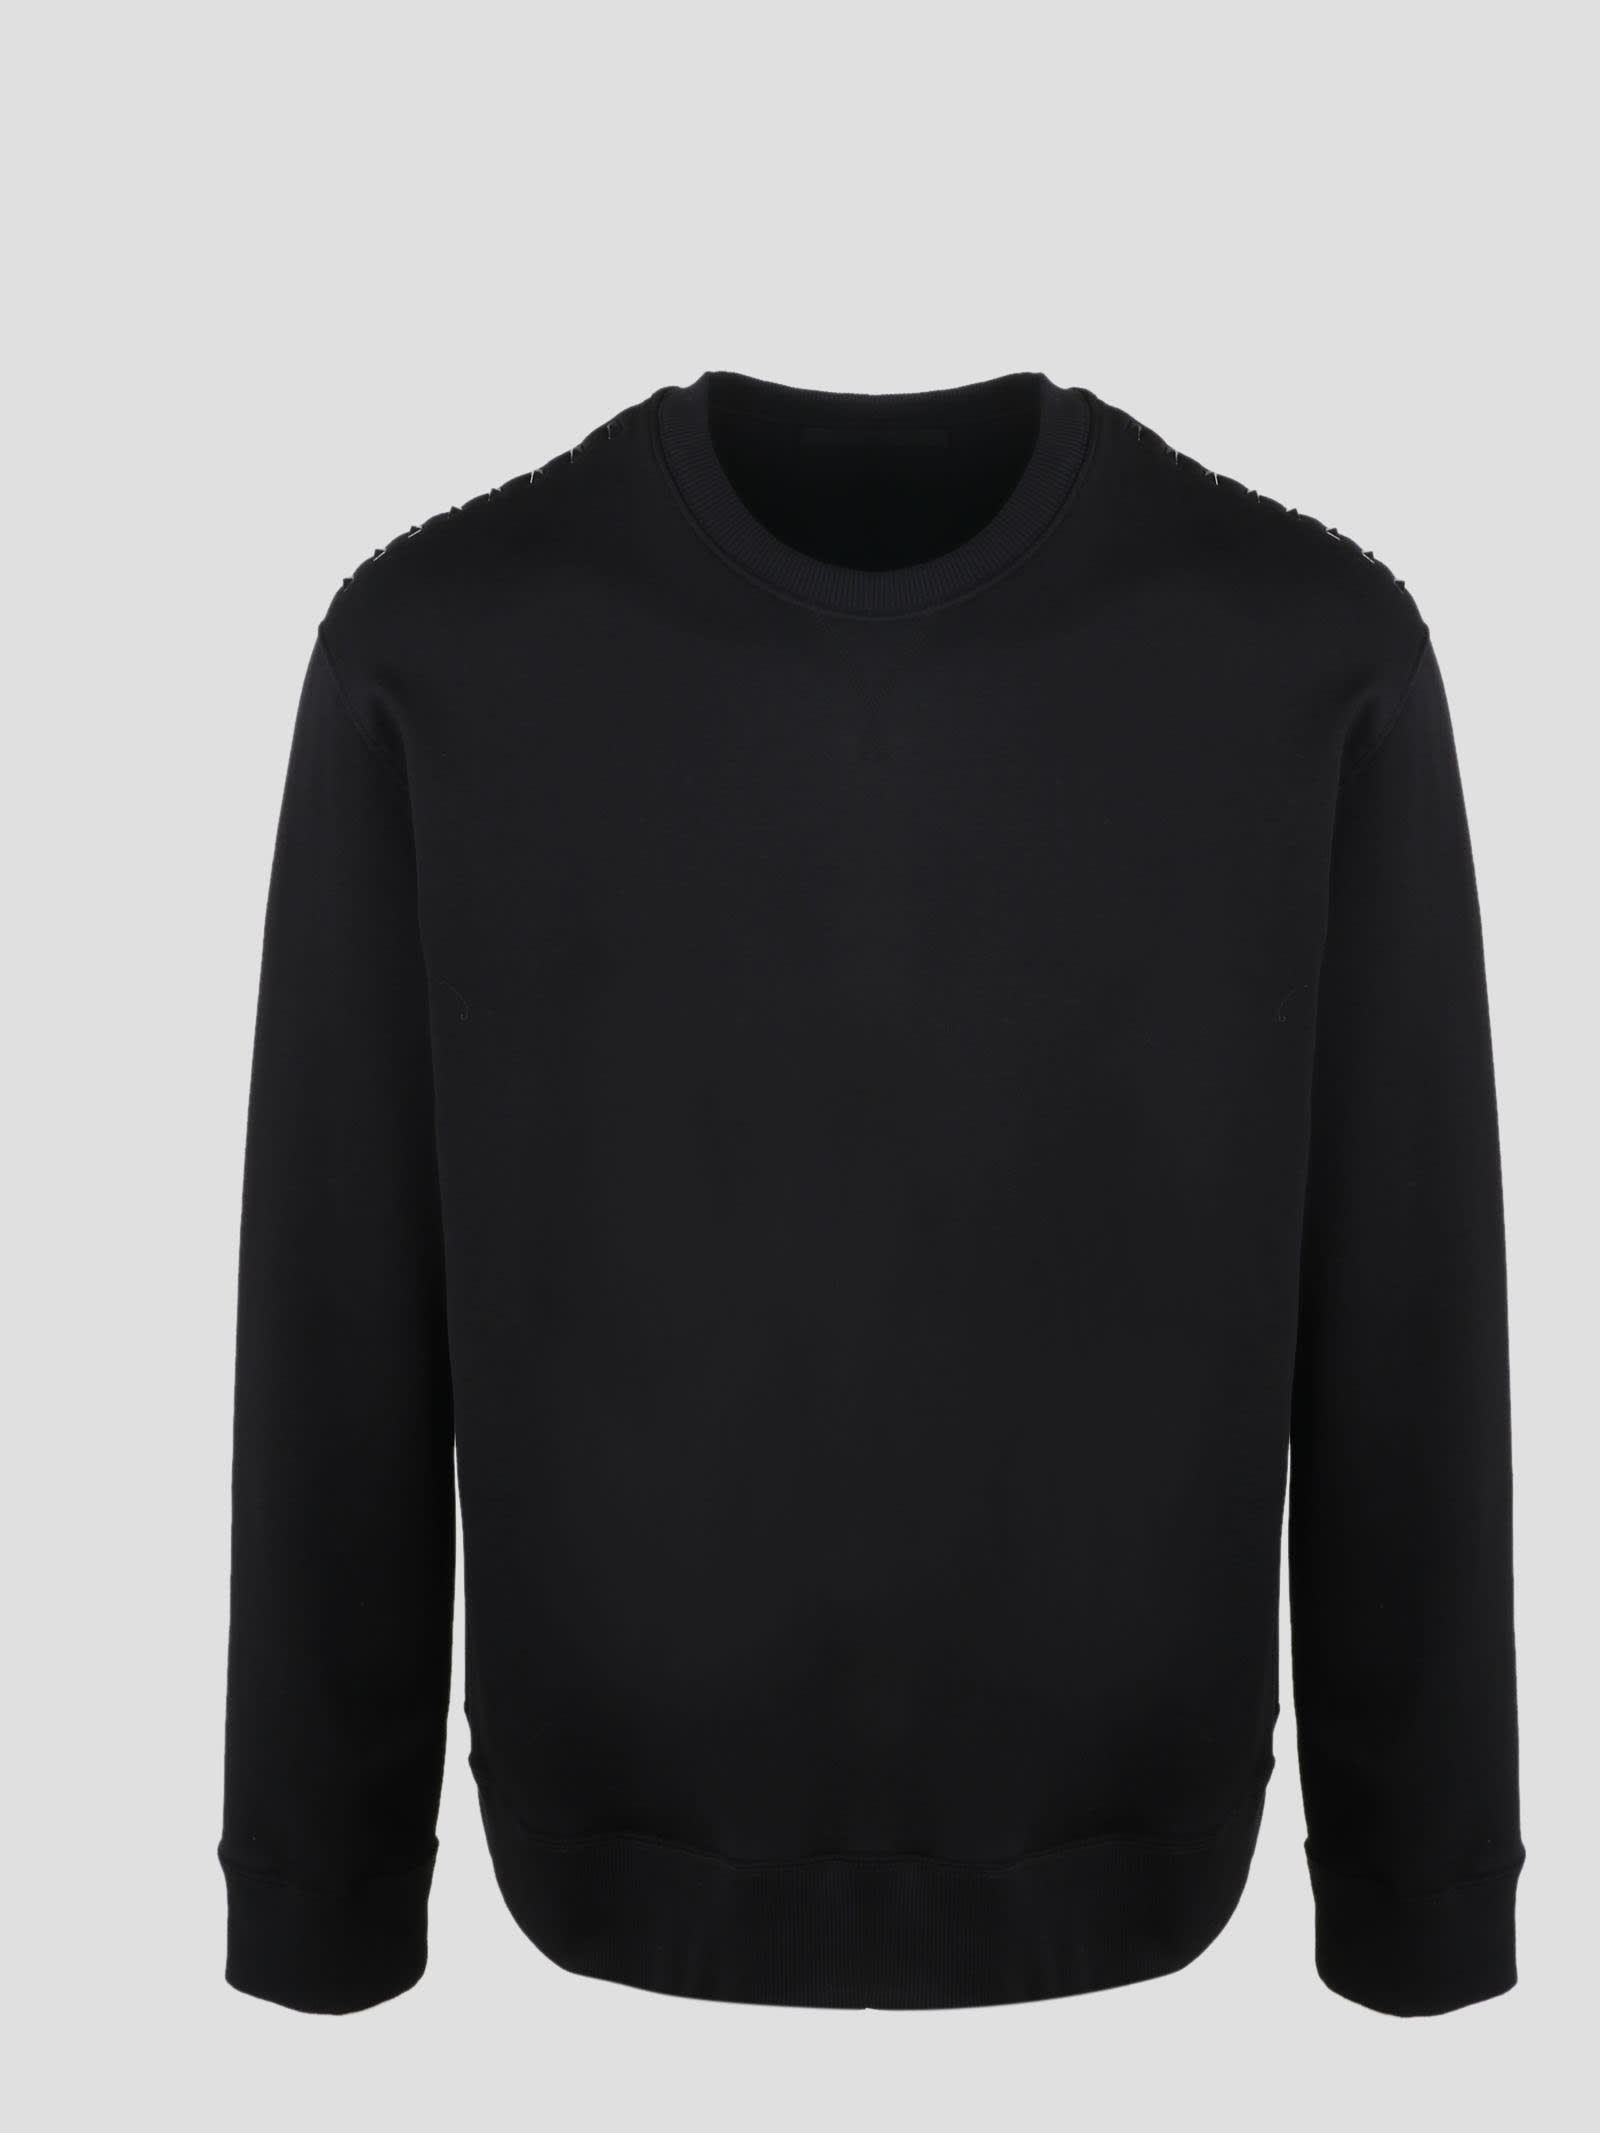 Valentino Black Untitled Studs Crewneck Sweatshirt